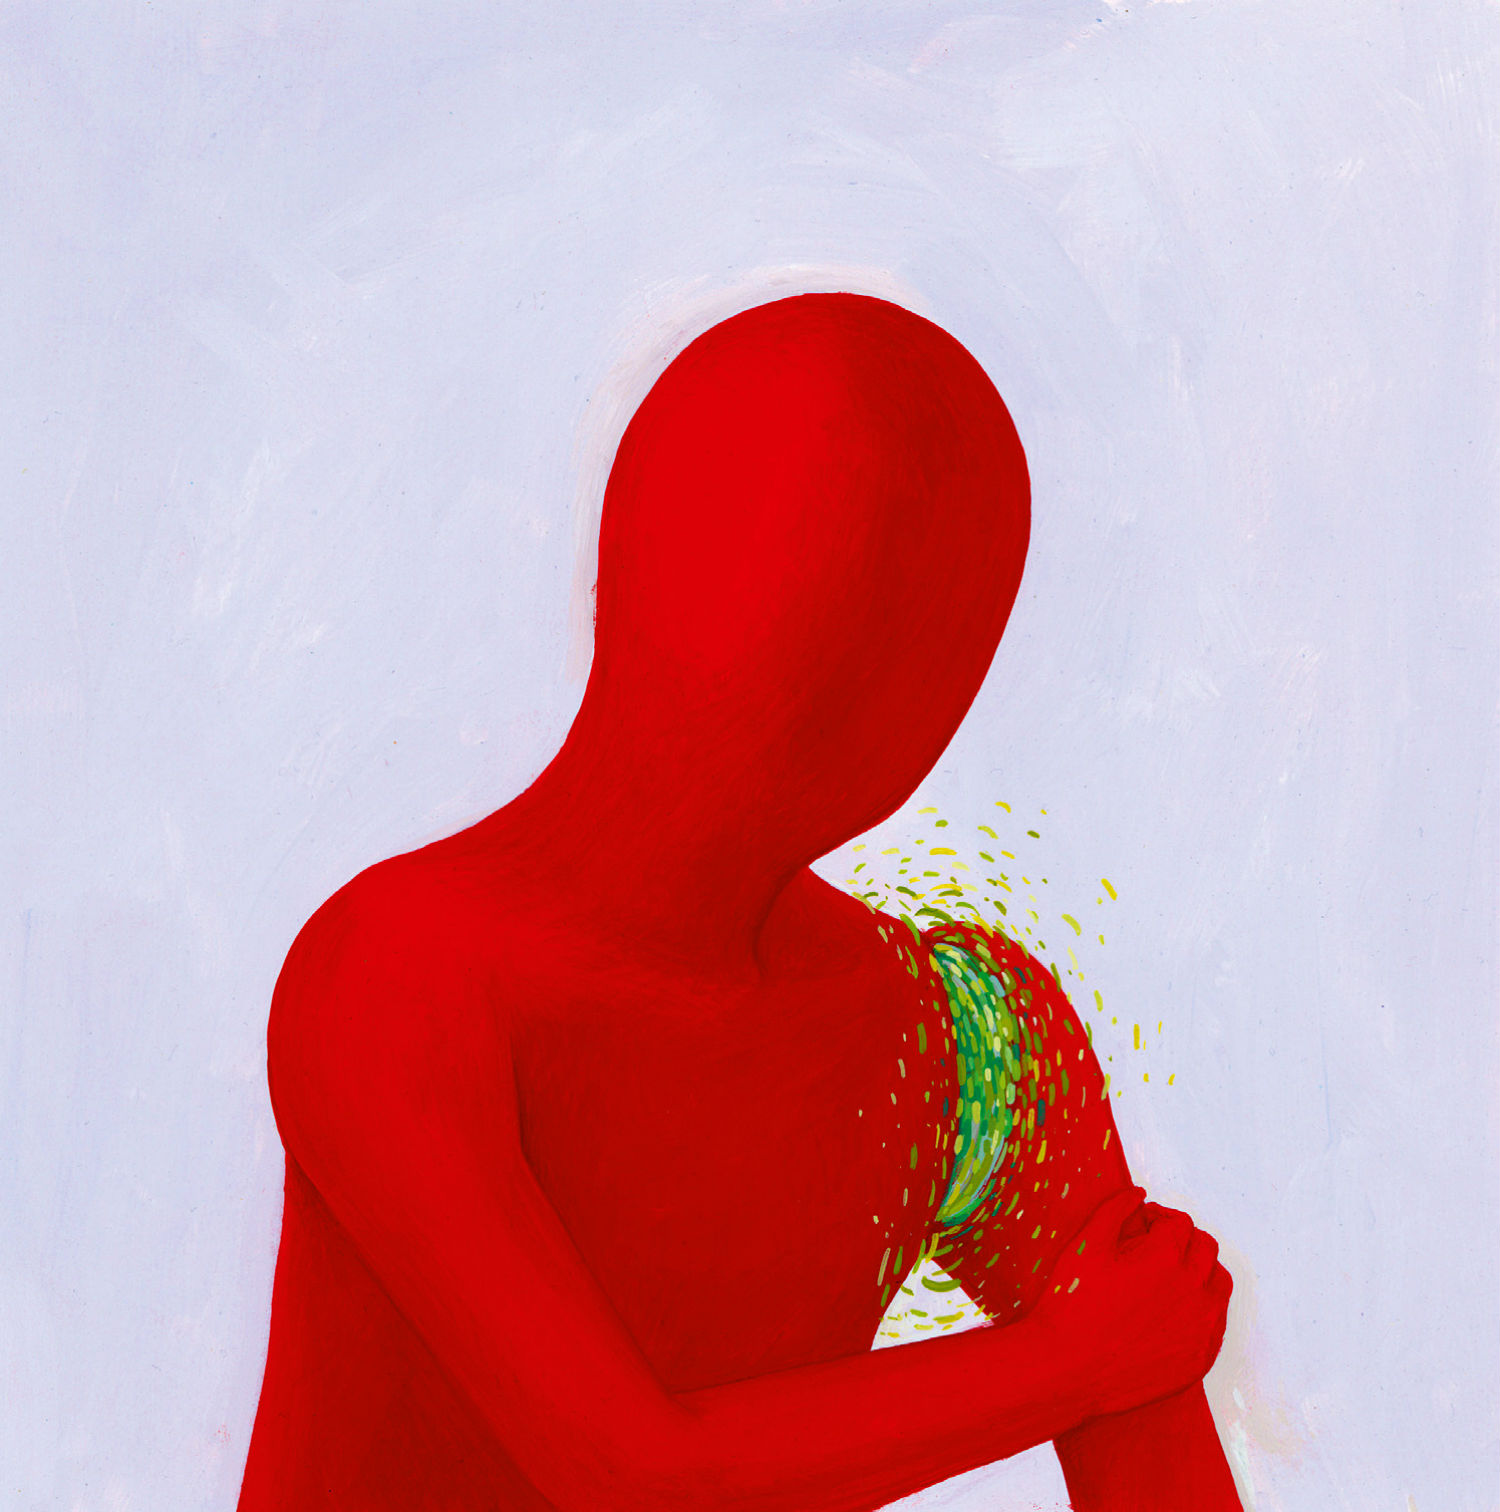 brendan monroe illustration blob colour surreal red arm